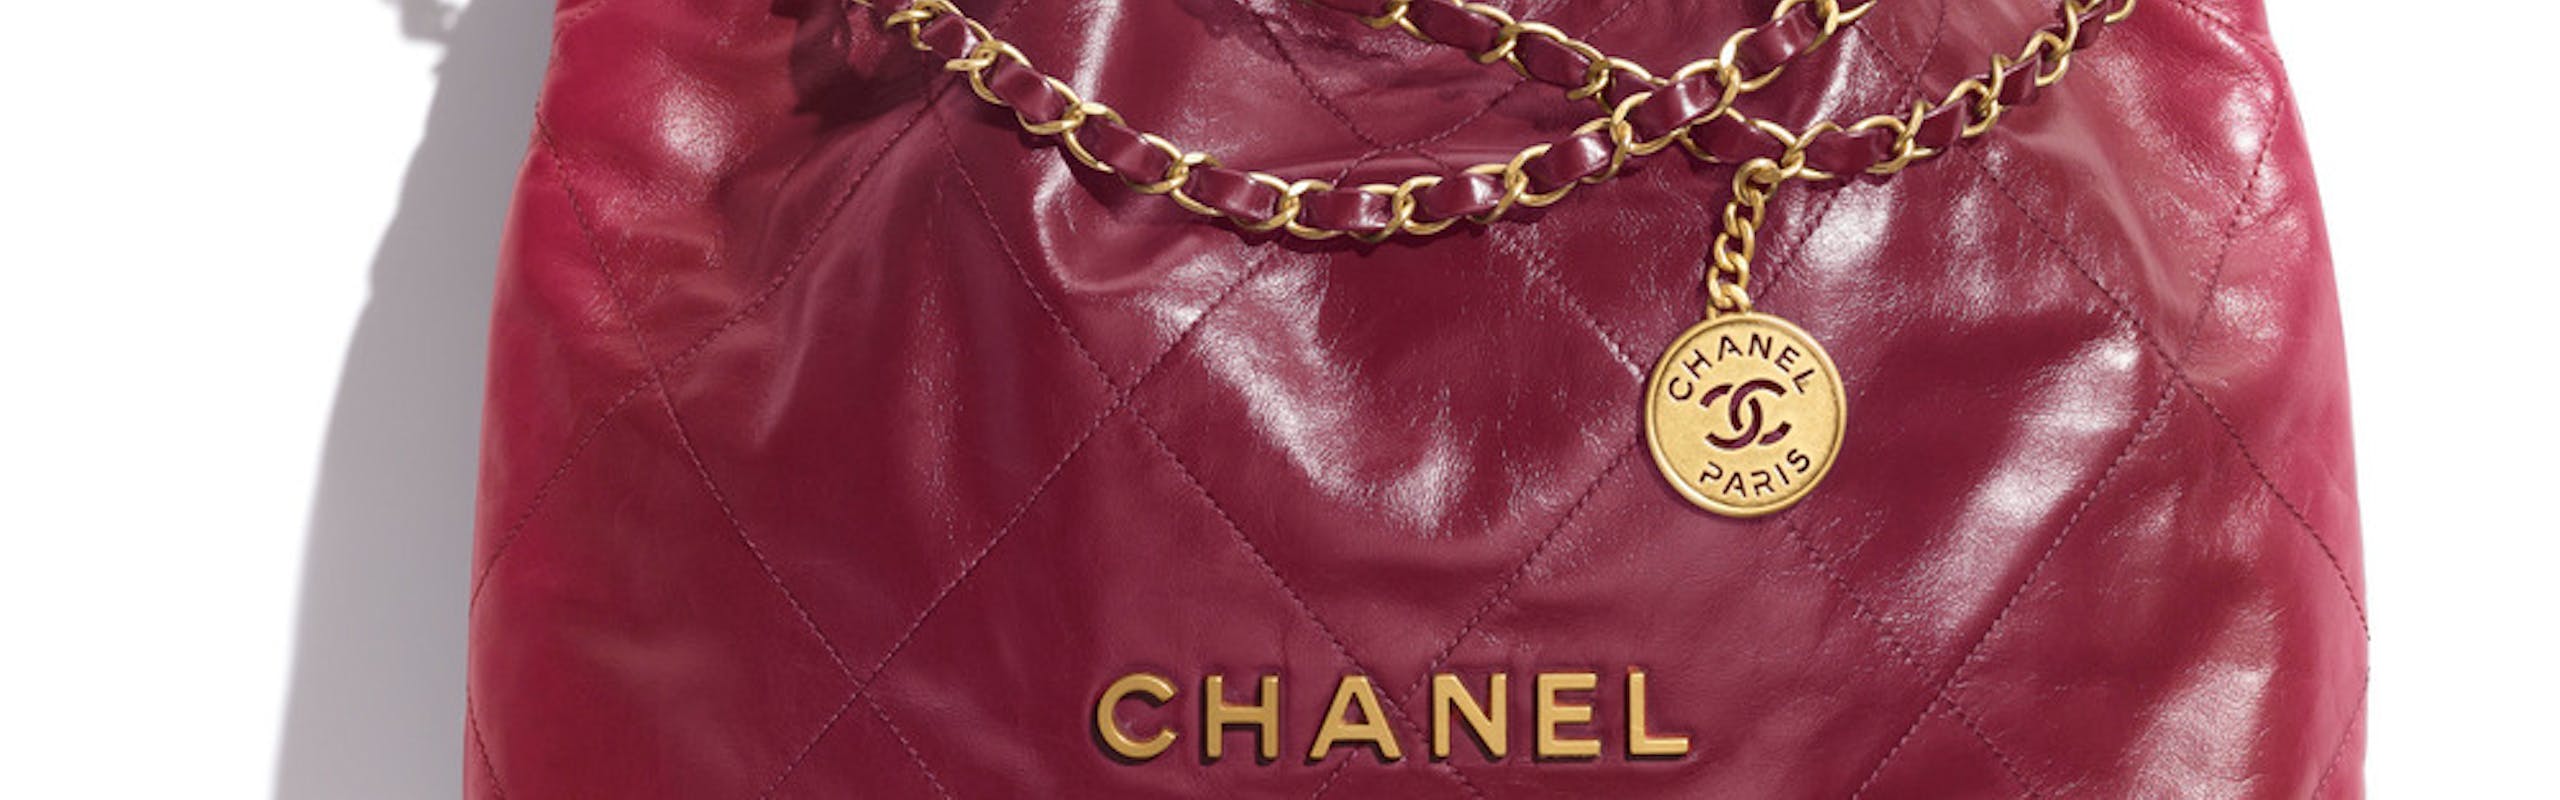 Chanel 22 bag in burgundy